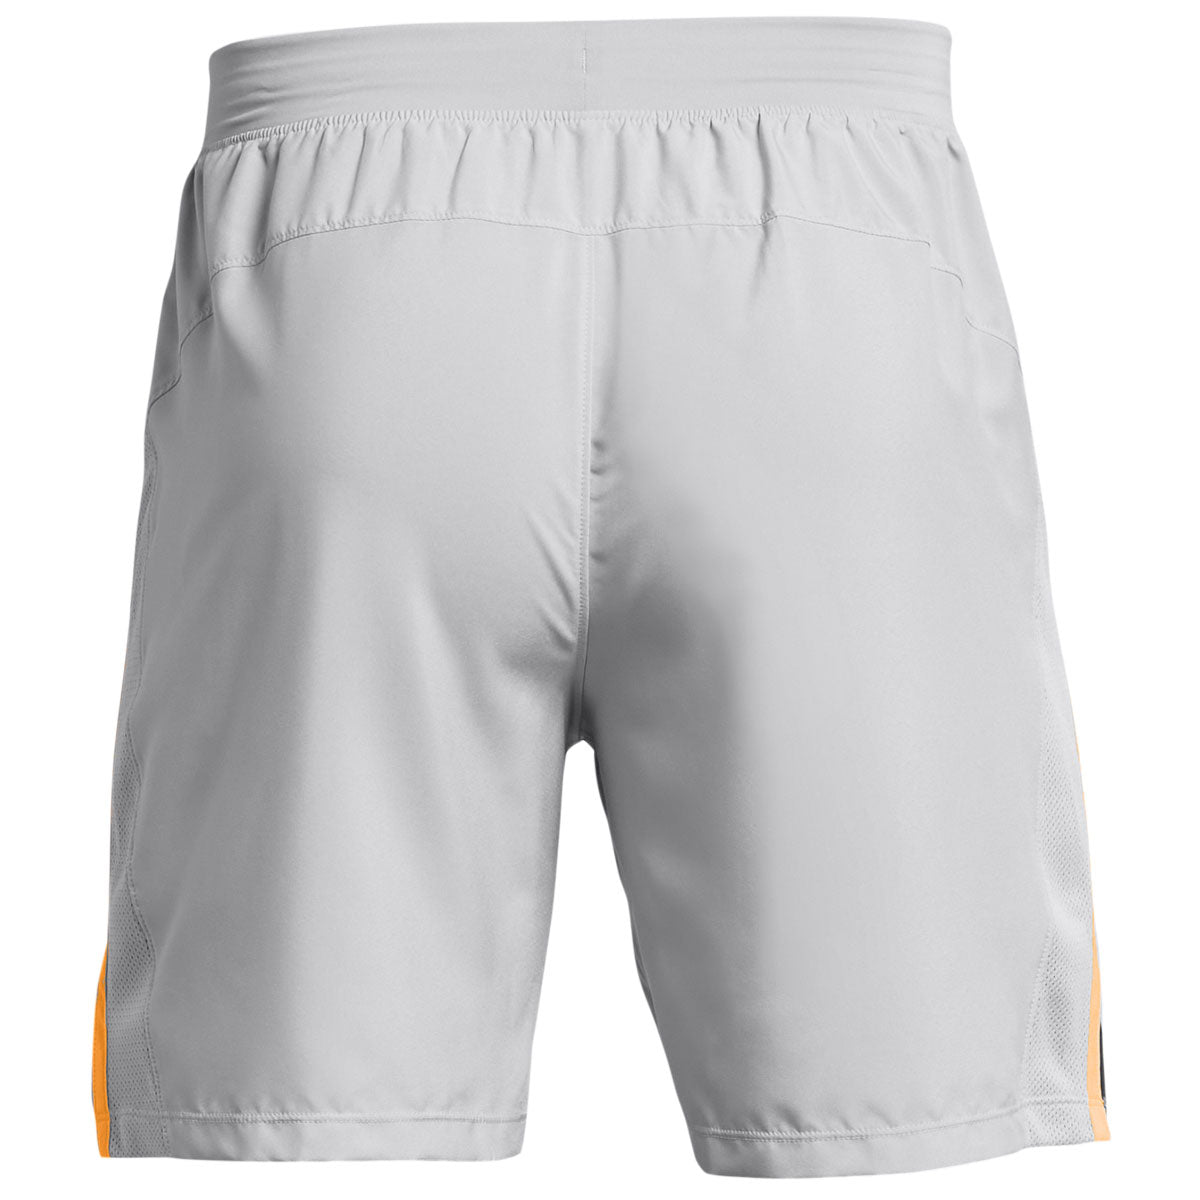 Under Armour Launch 7 inch Unlined Running Shorts - Mens - Mod Grey/Nova Orange/Reflective